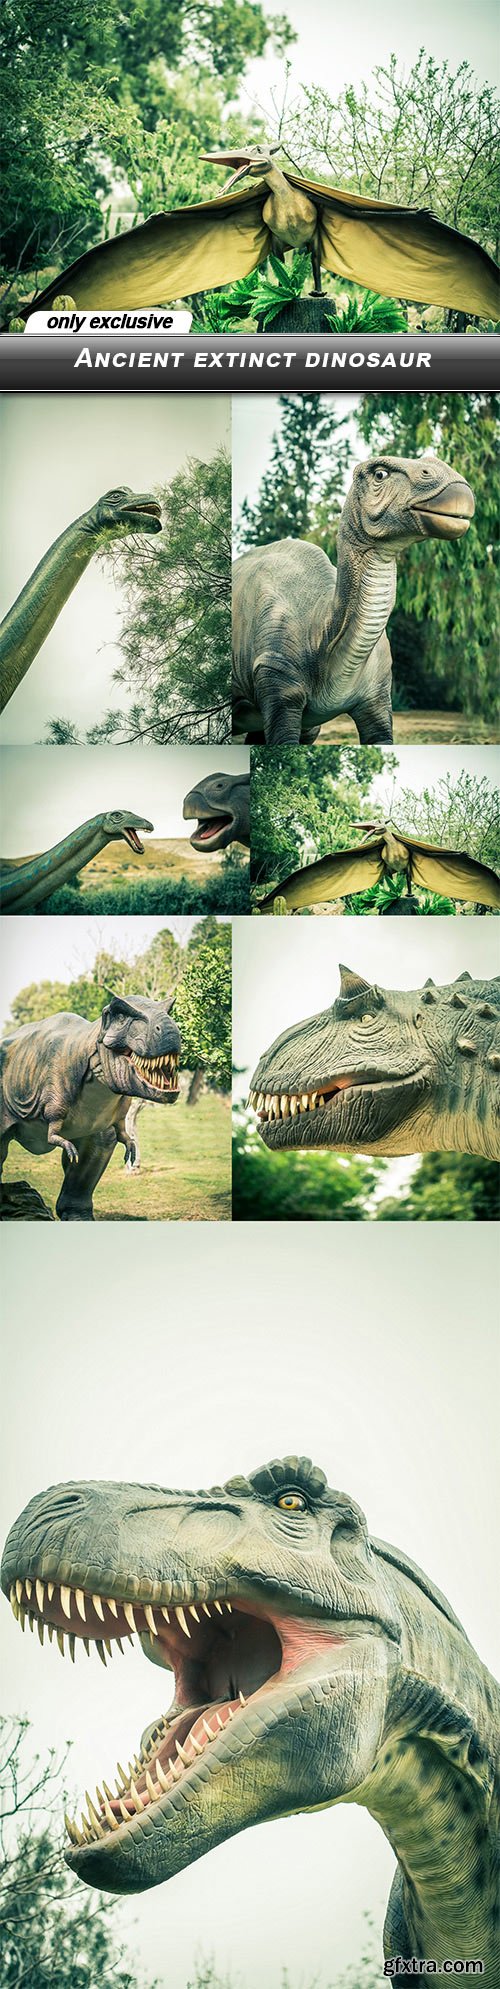 Ancient extinct dinosaur - 7 UHQ JPEG